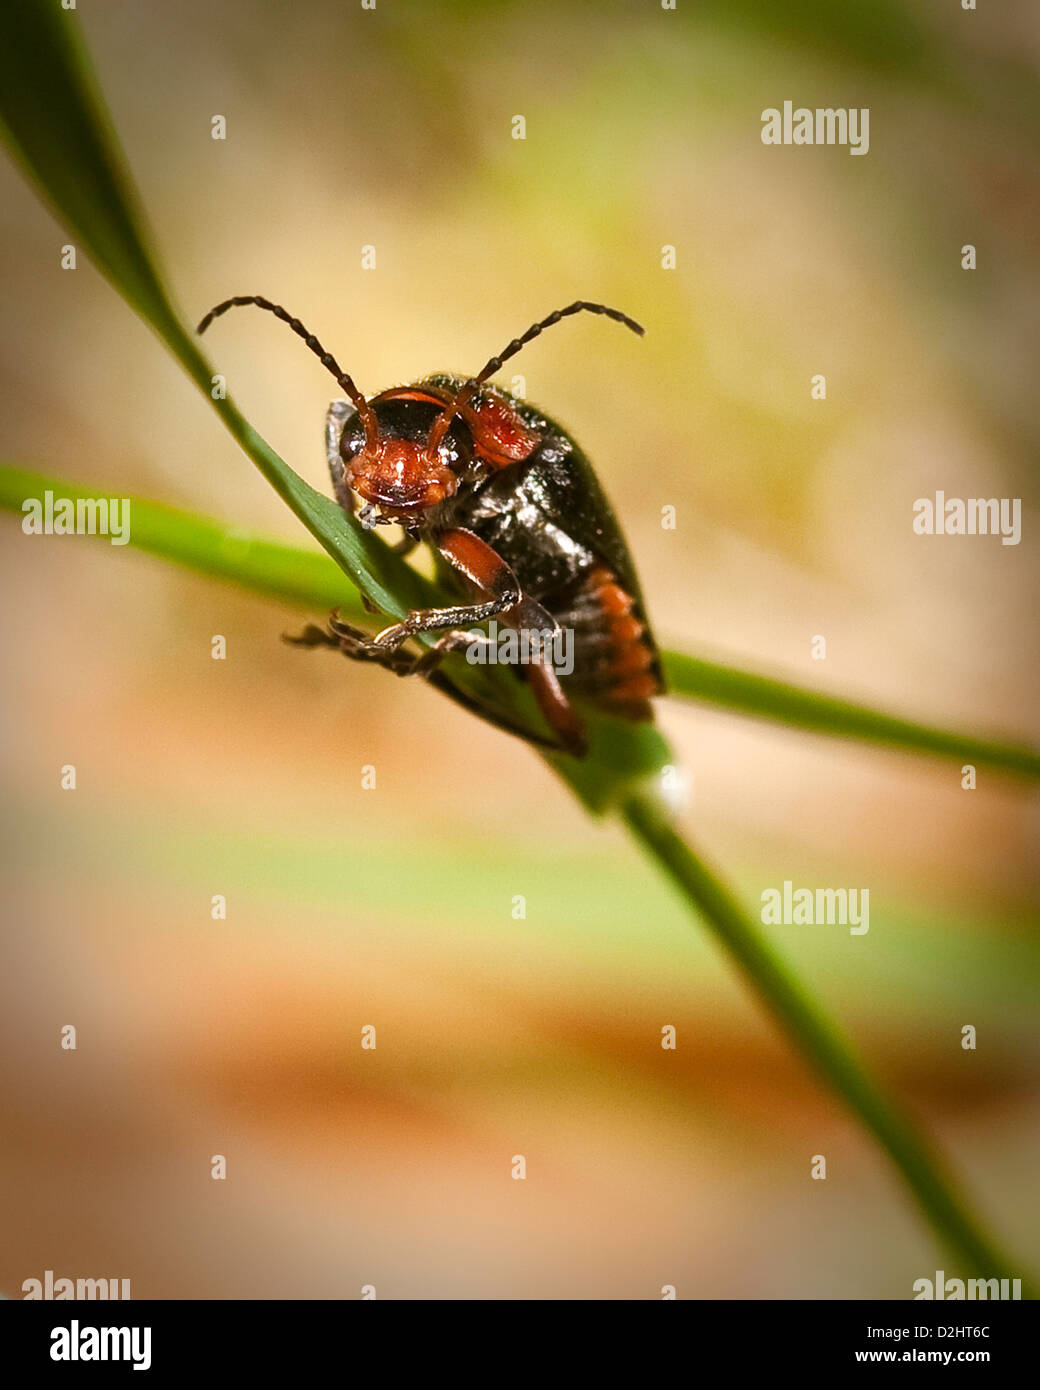 Closeup of Beetle Climbing a Blade of Grass Stock Photo